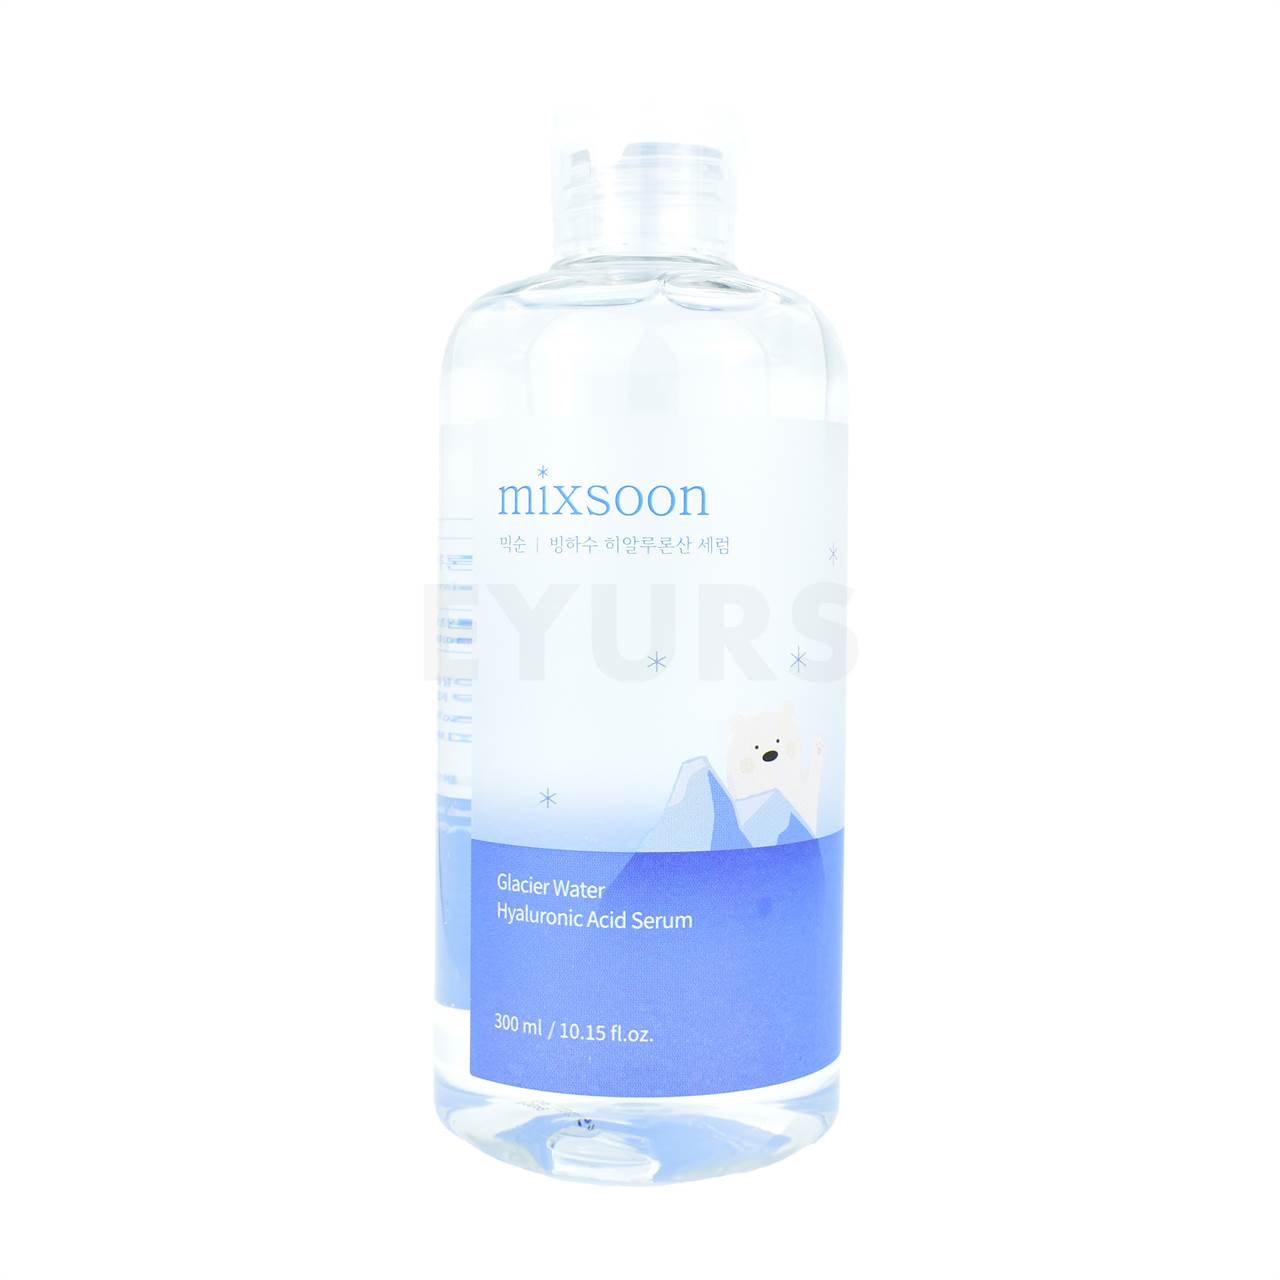 mixsoon glacier water hyaluronic acid serum 300ml